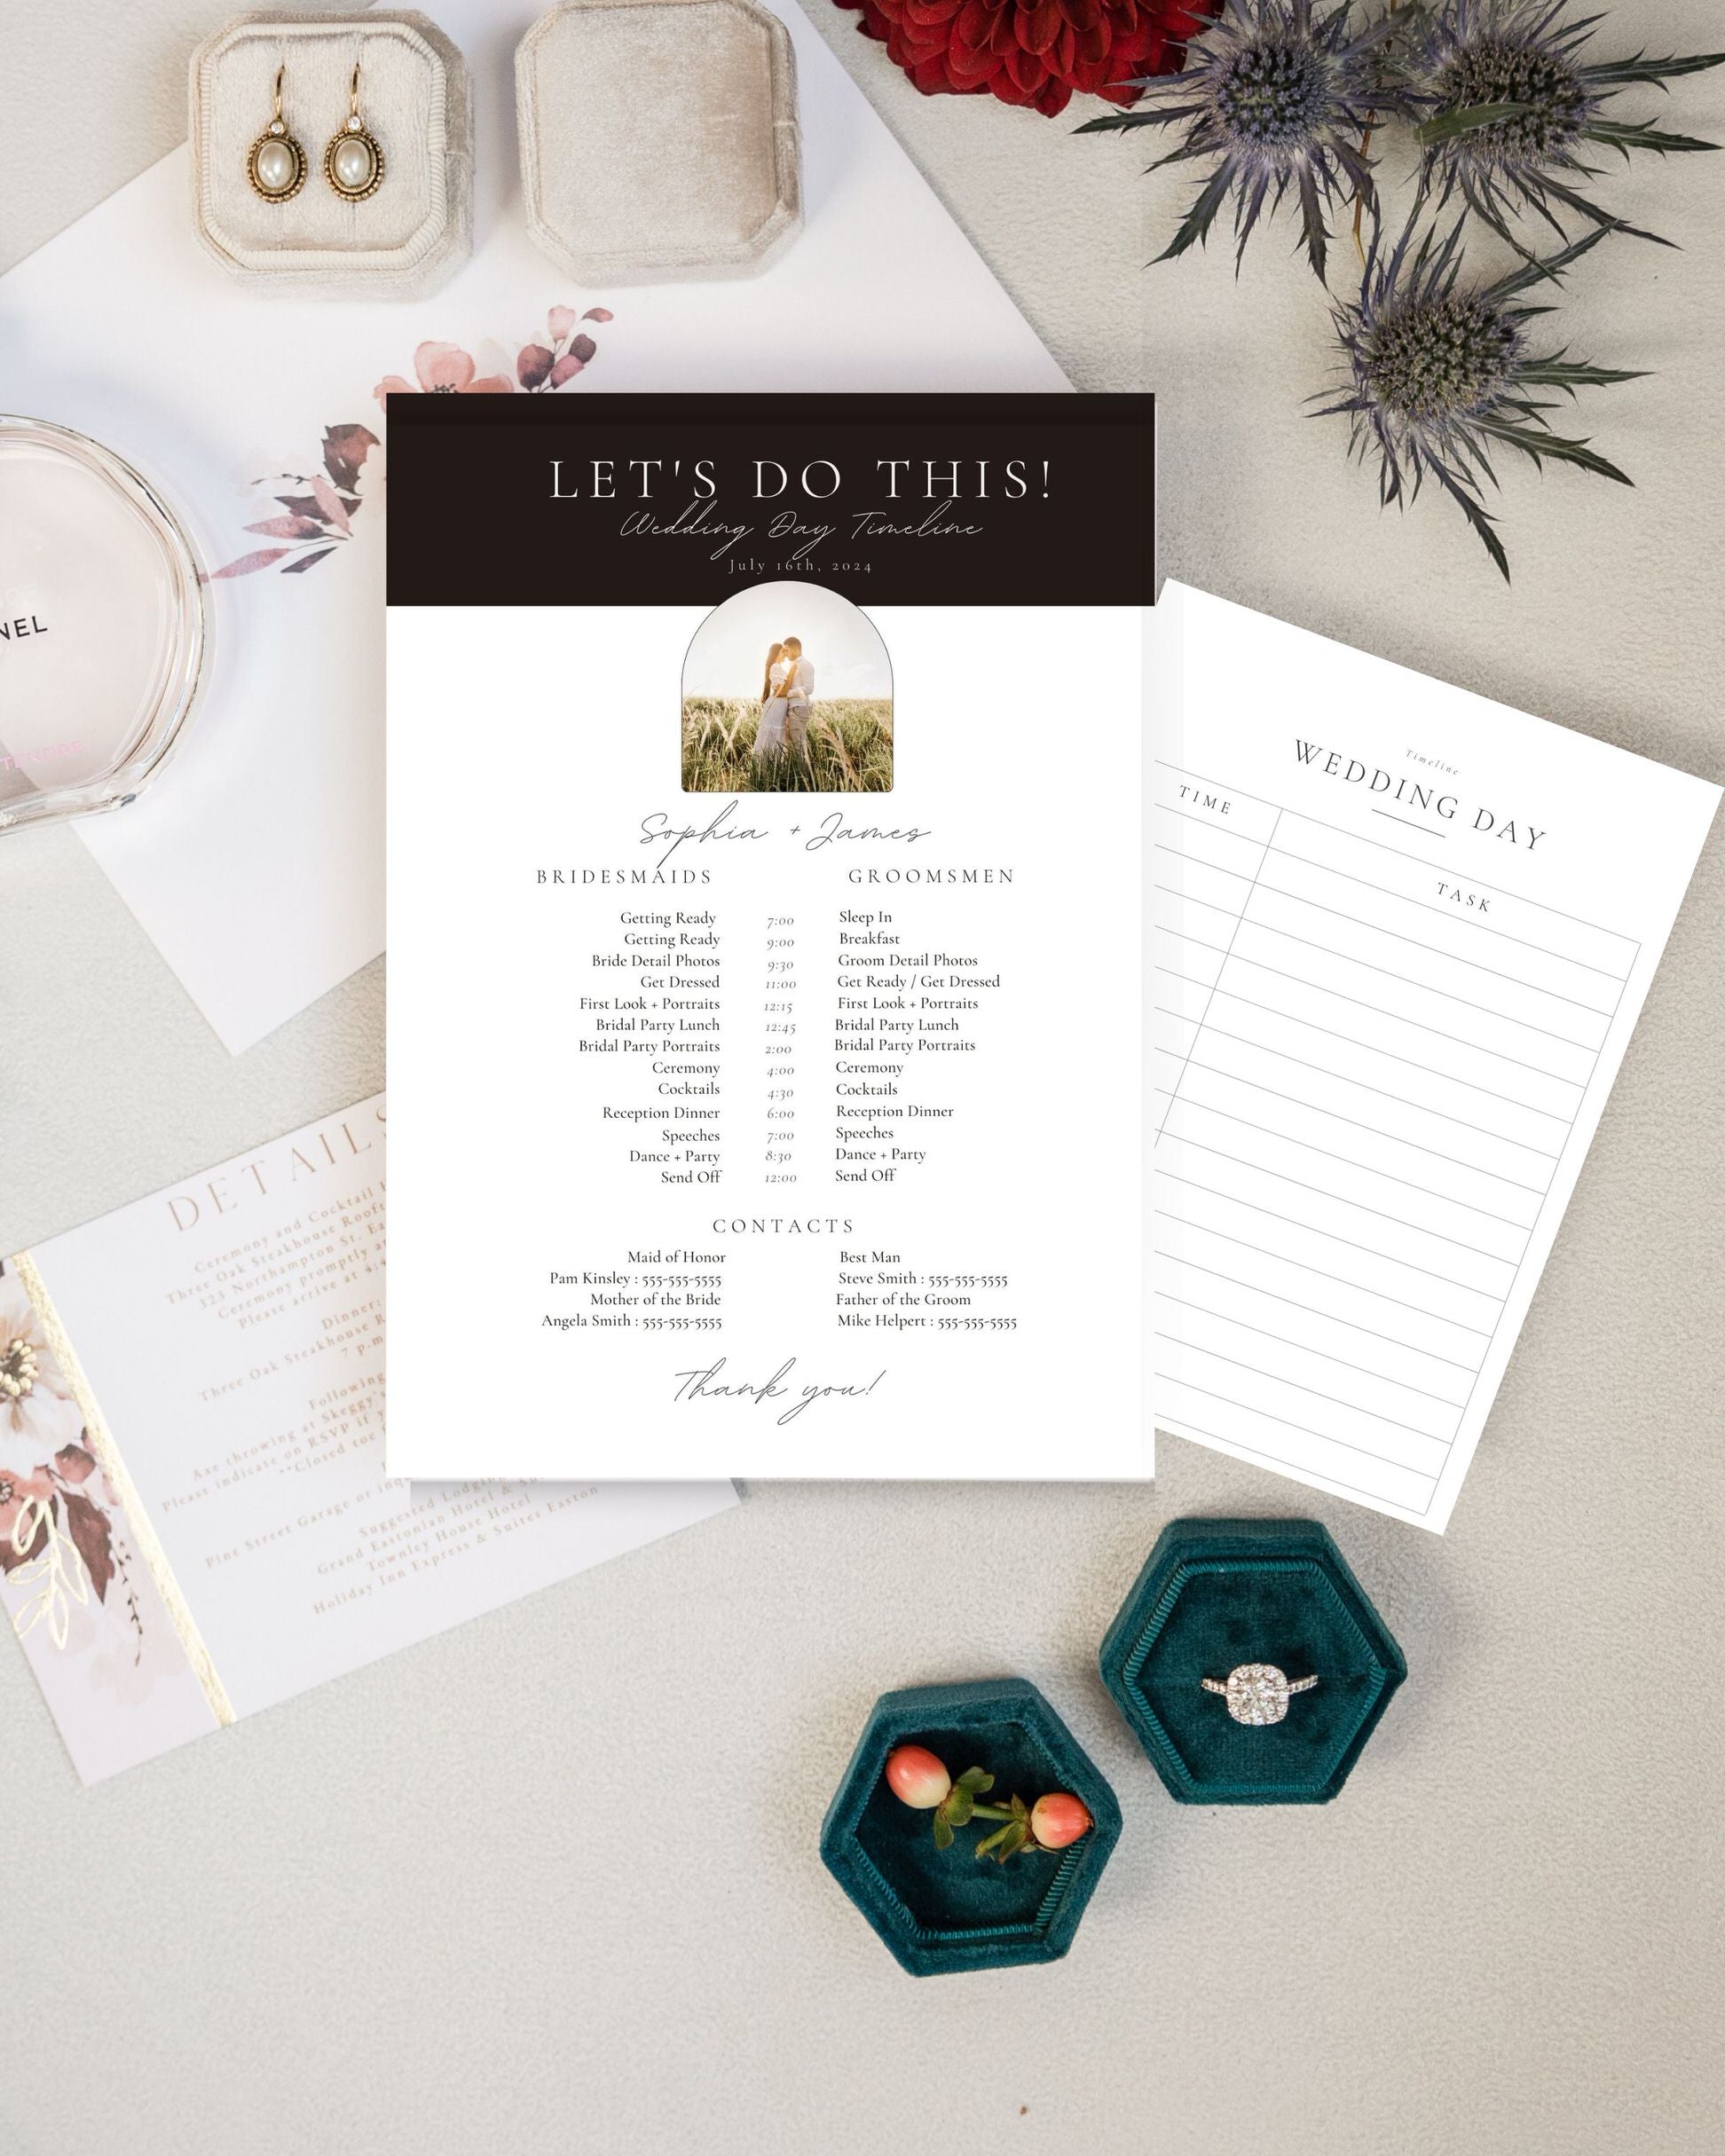 Wedding Planner, Printable Wedding Planner, Wedding Binder, DIY